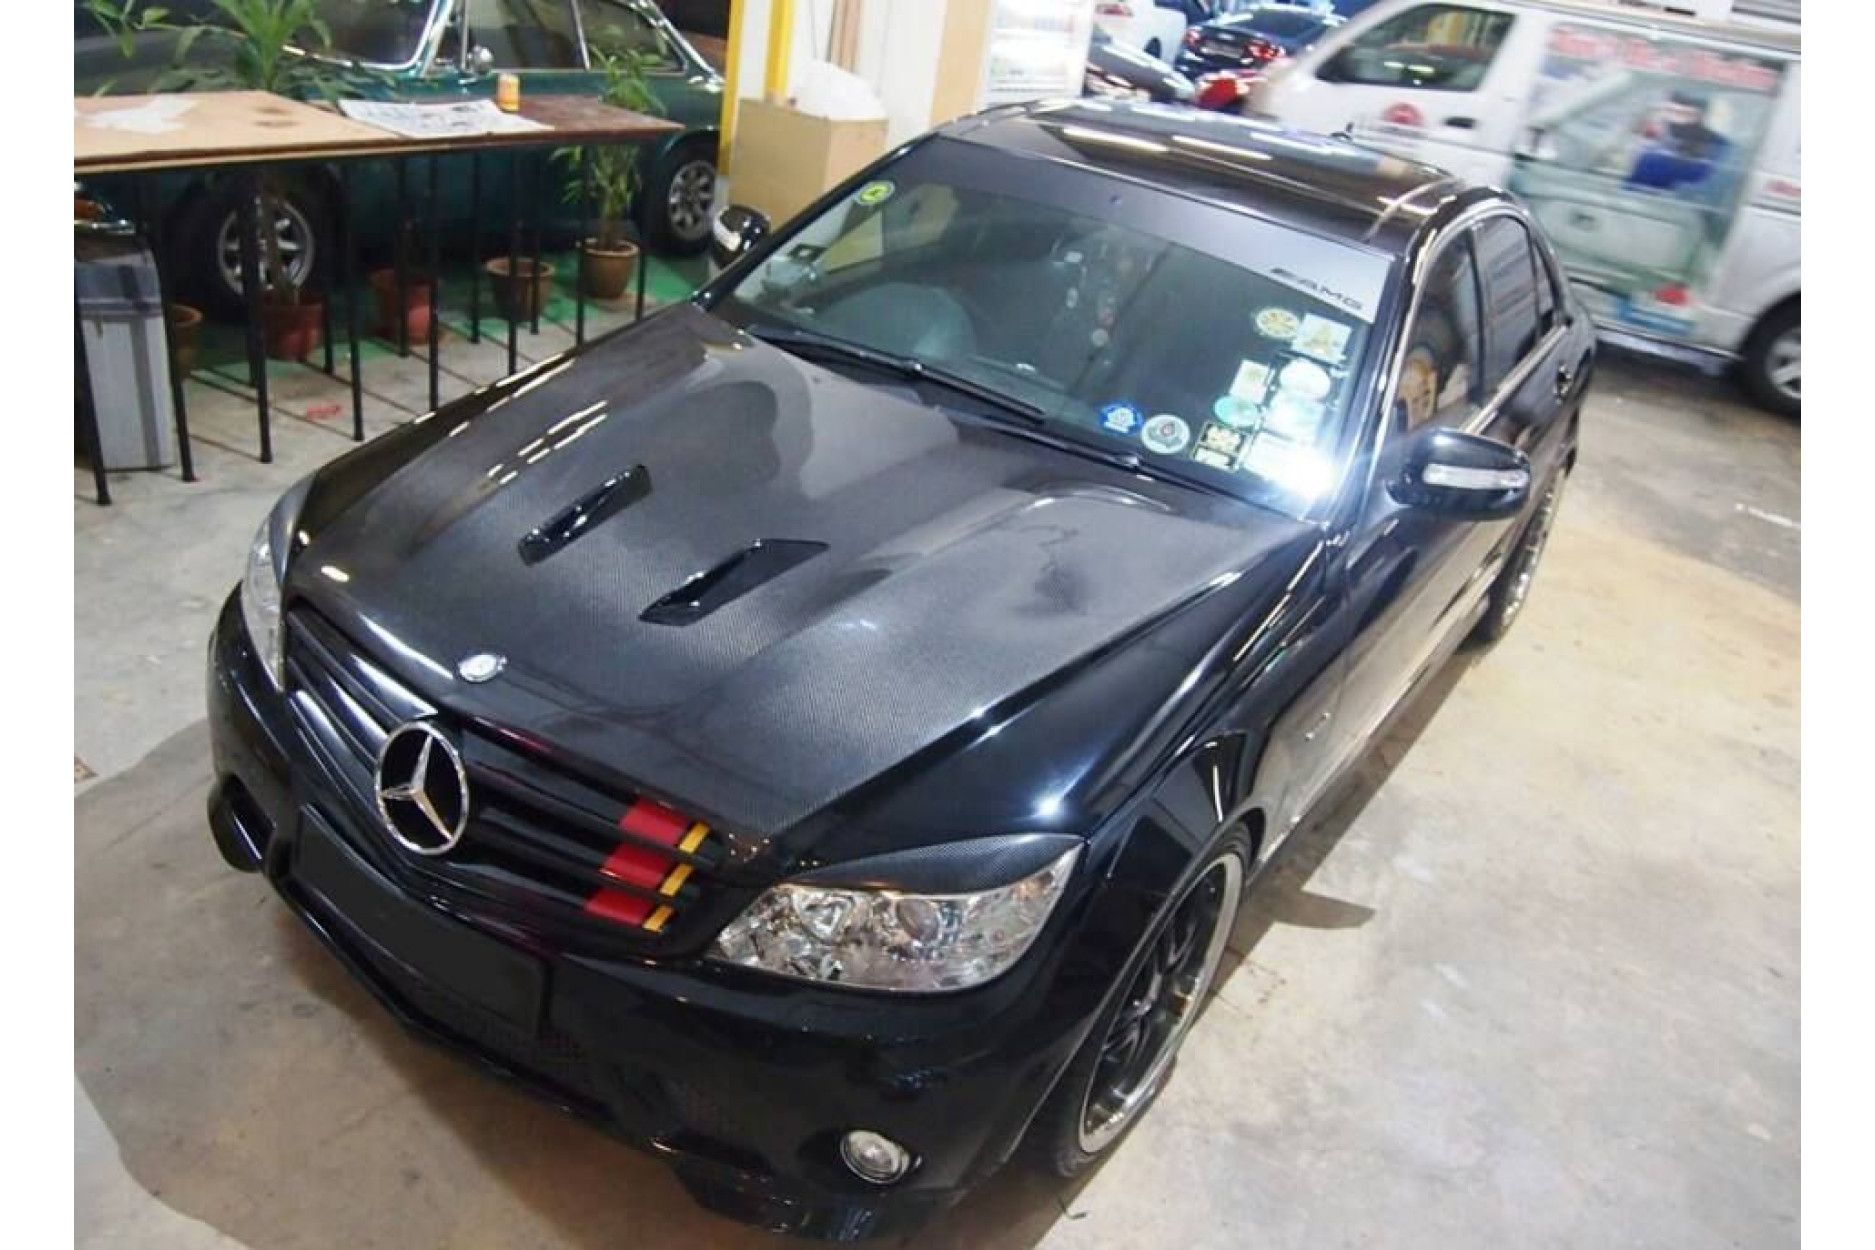 Boca Carbon Motorhaube Black-Series-Style für Mercedes Benz C-Klasse W204  C180, C200, C250